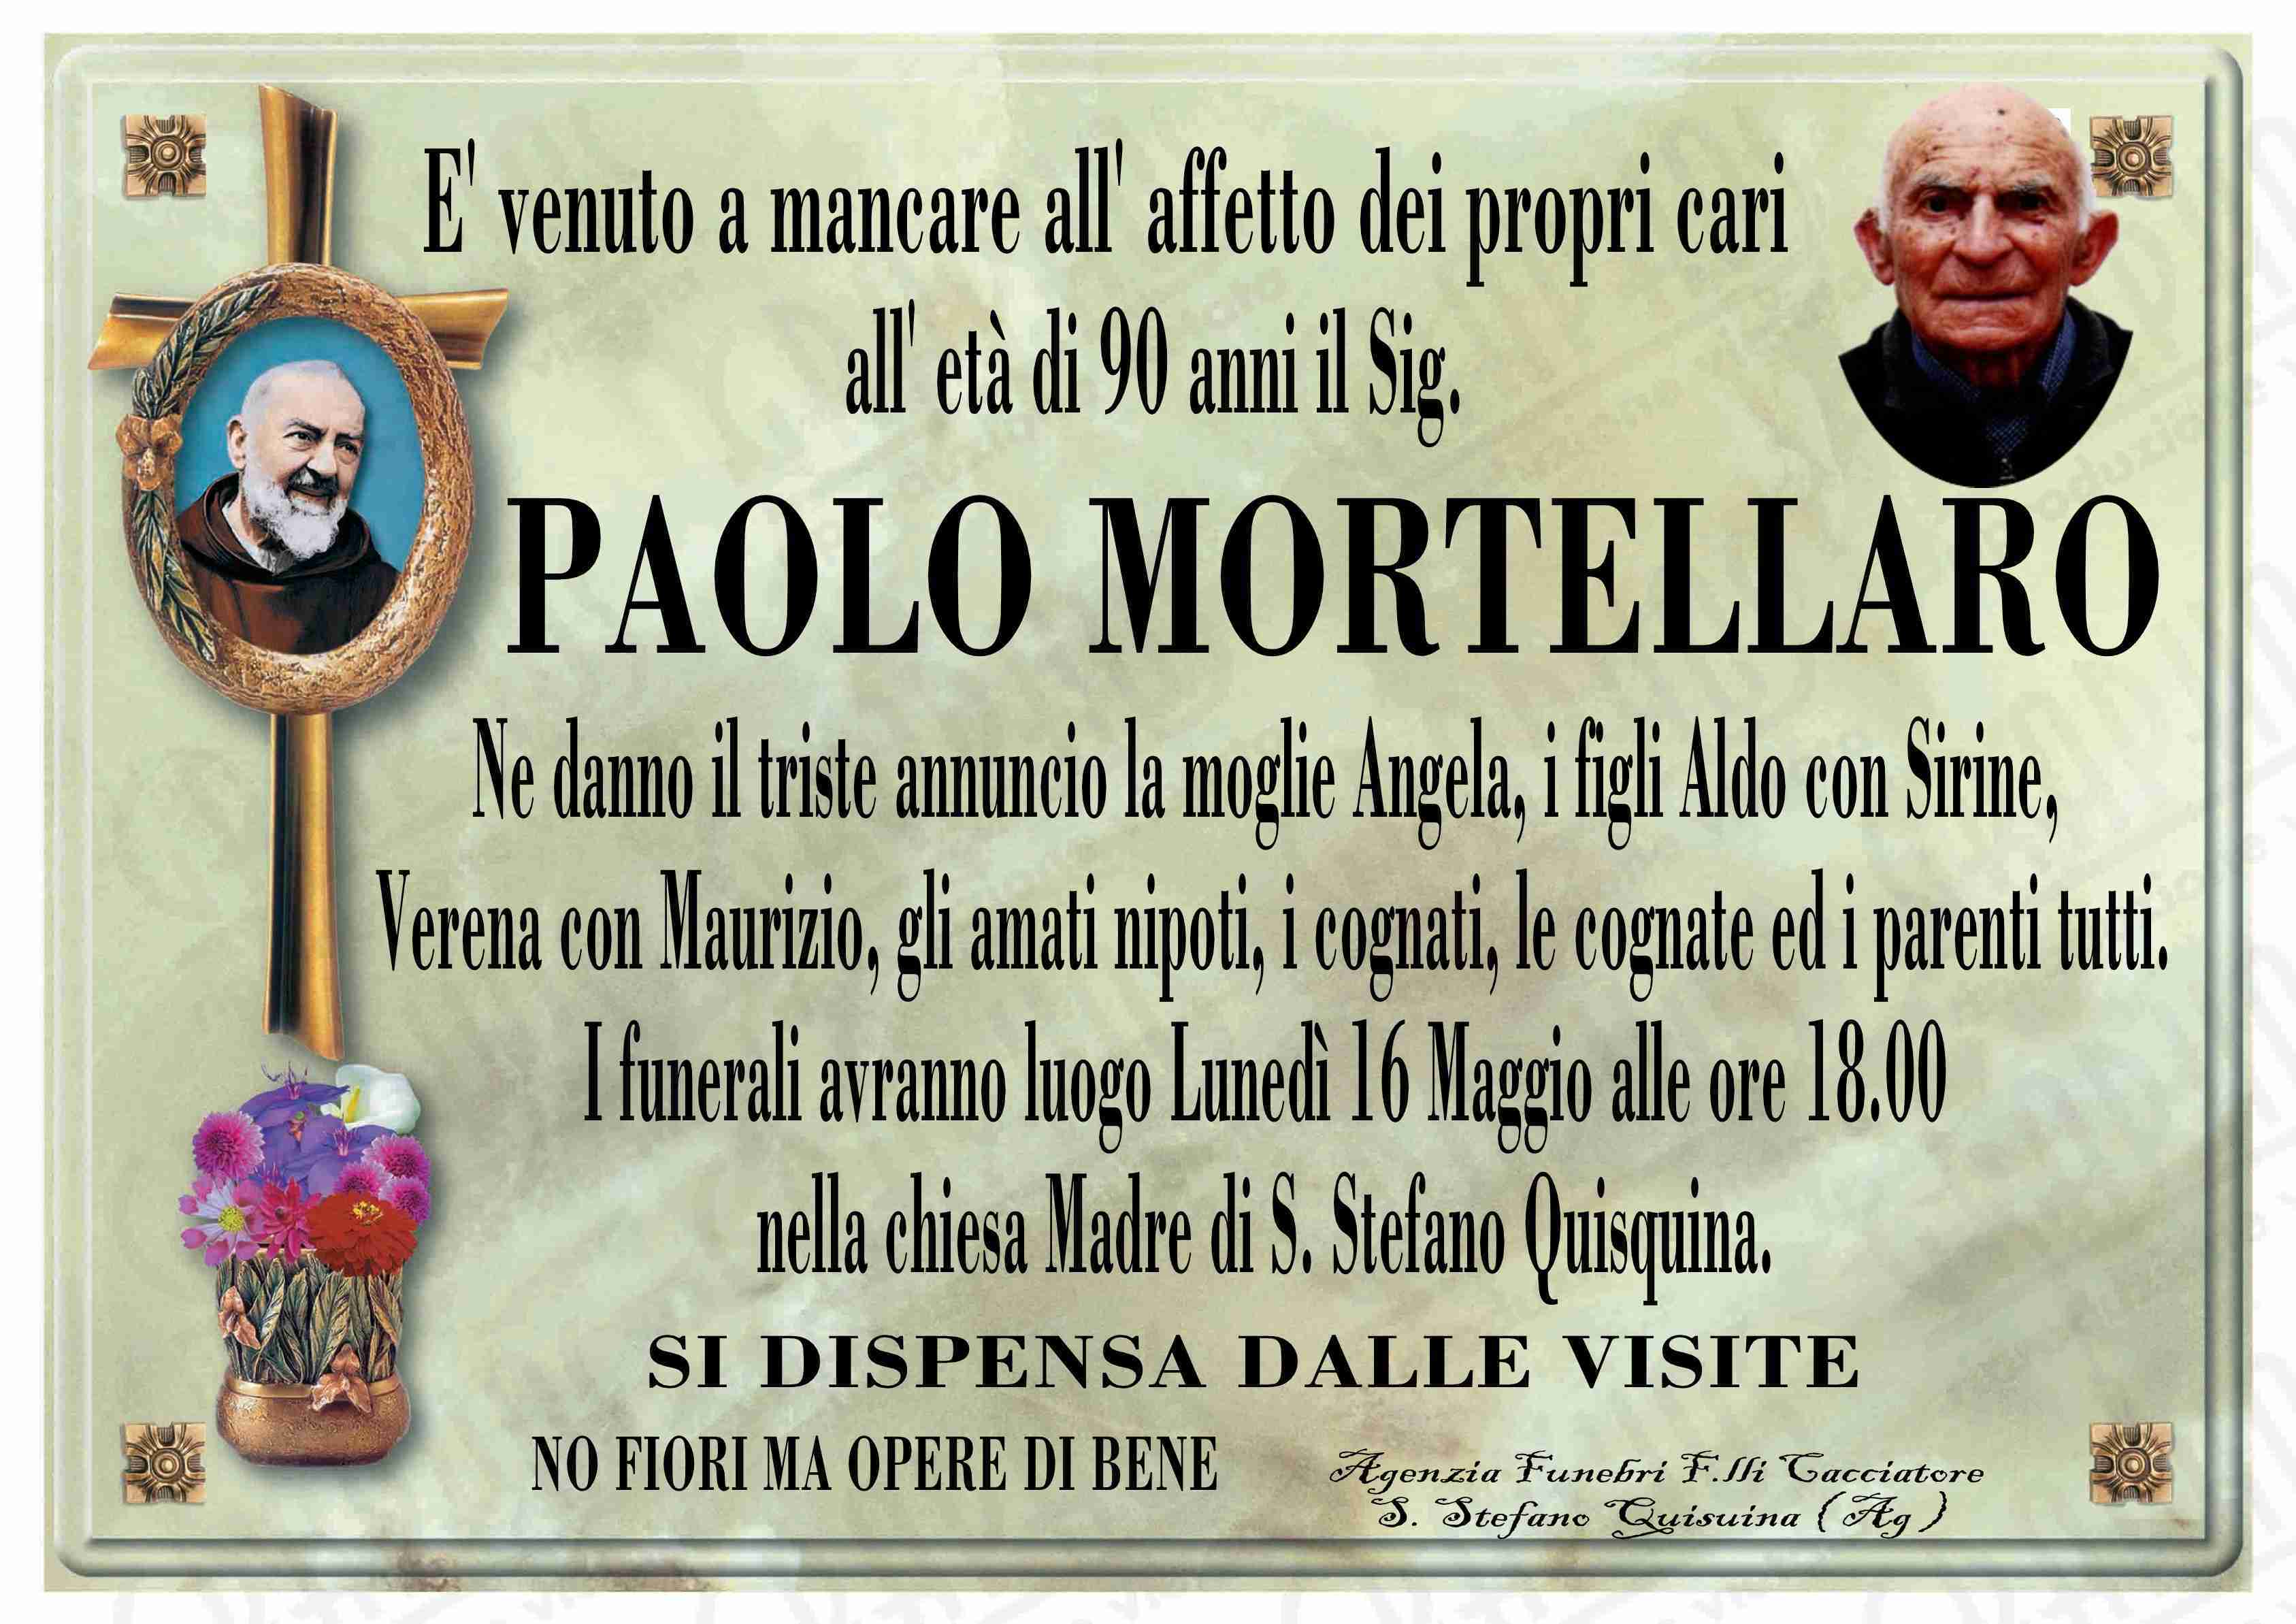 Paolo Mortellaro